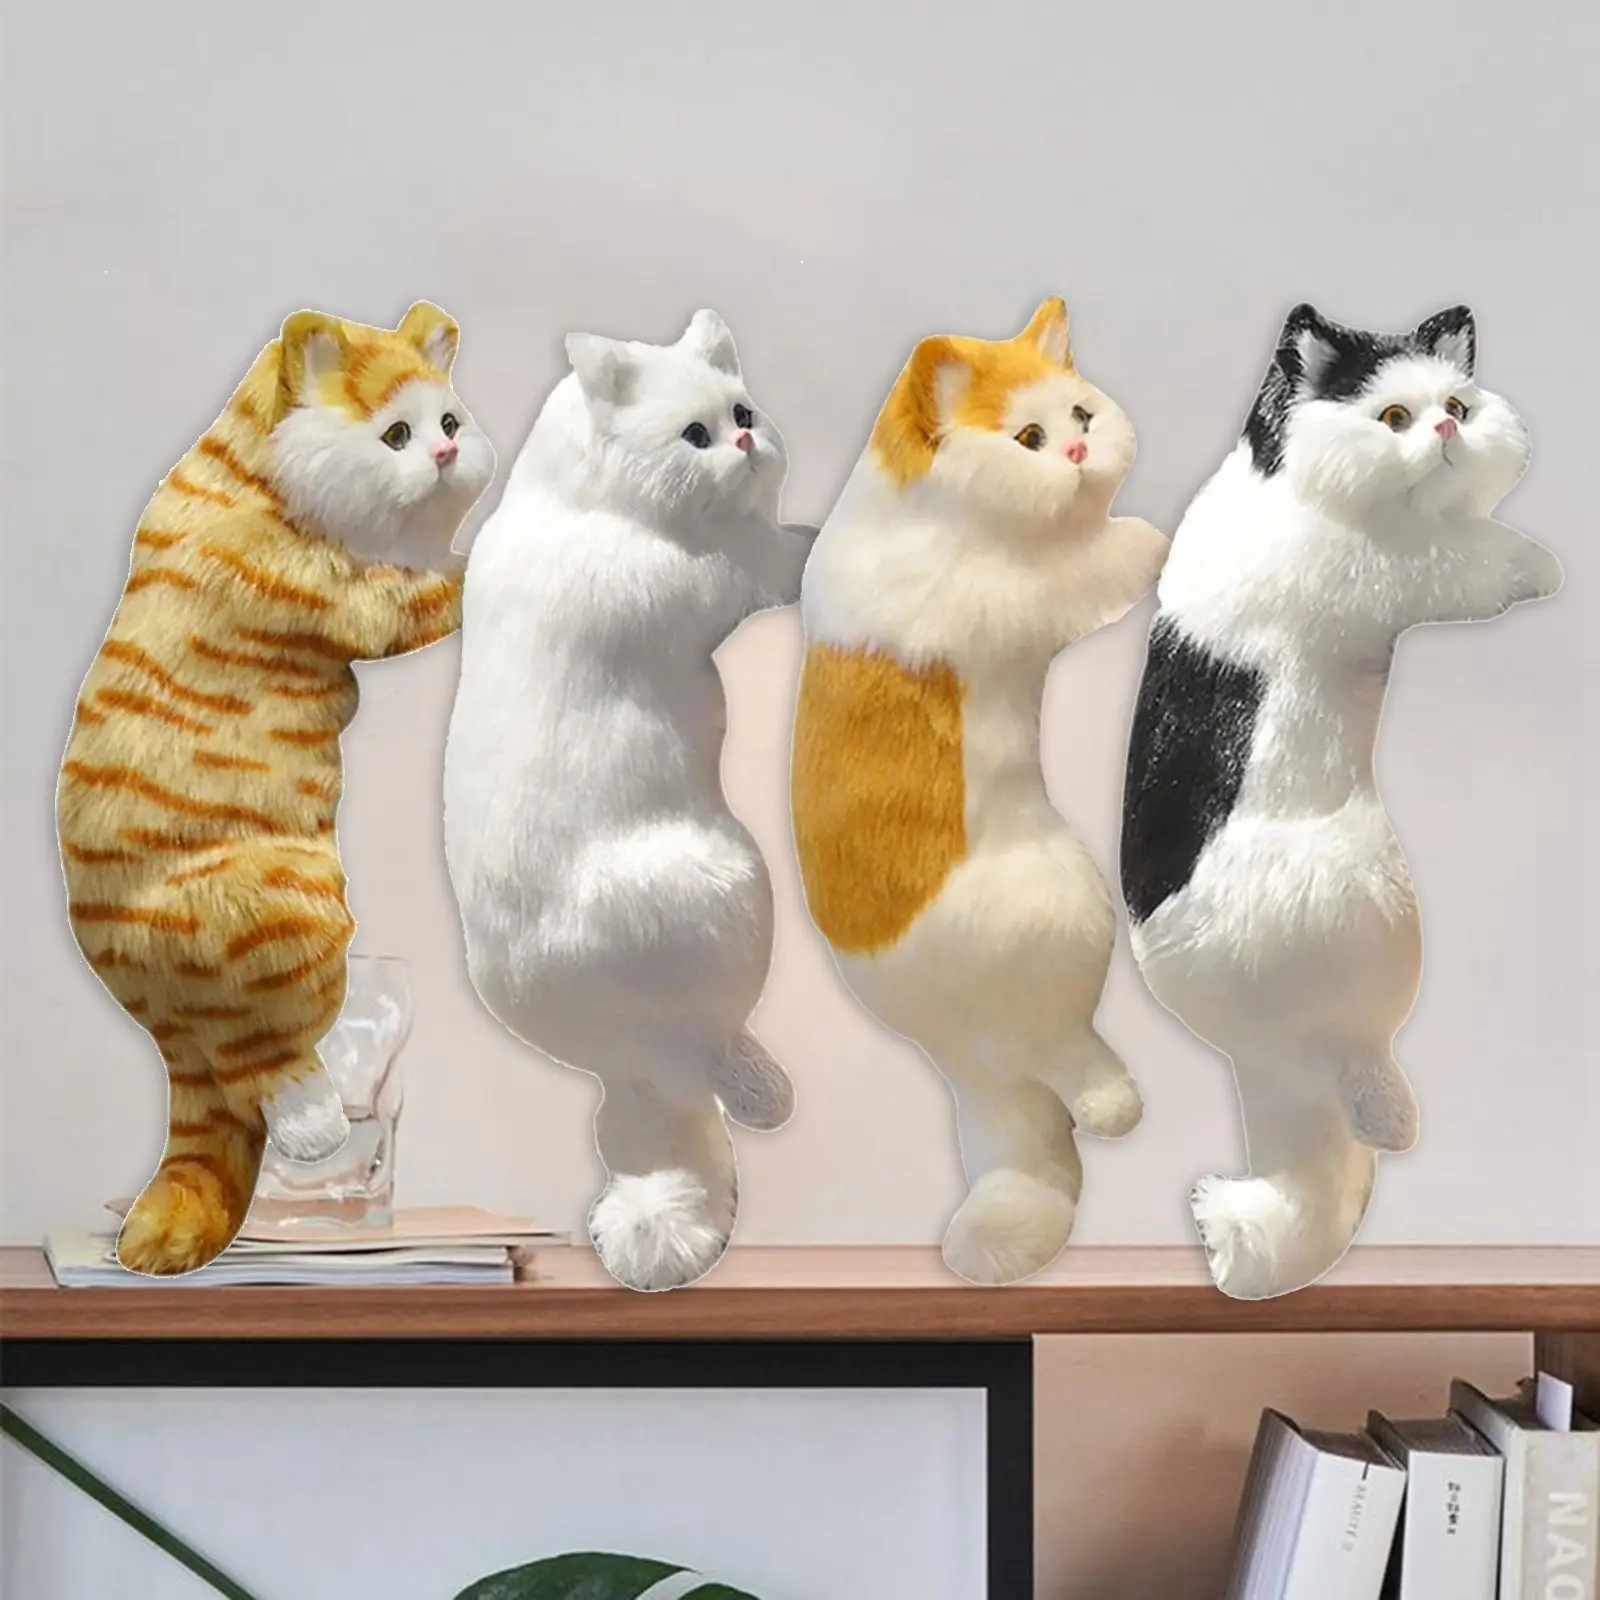 Simulation Plush Cat Statue Lifelike Plush Animal Handicrafts Toys for Wedding Gifts Table Desk Home Decor Art Ornaments